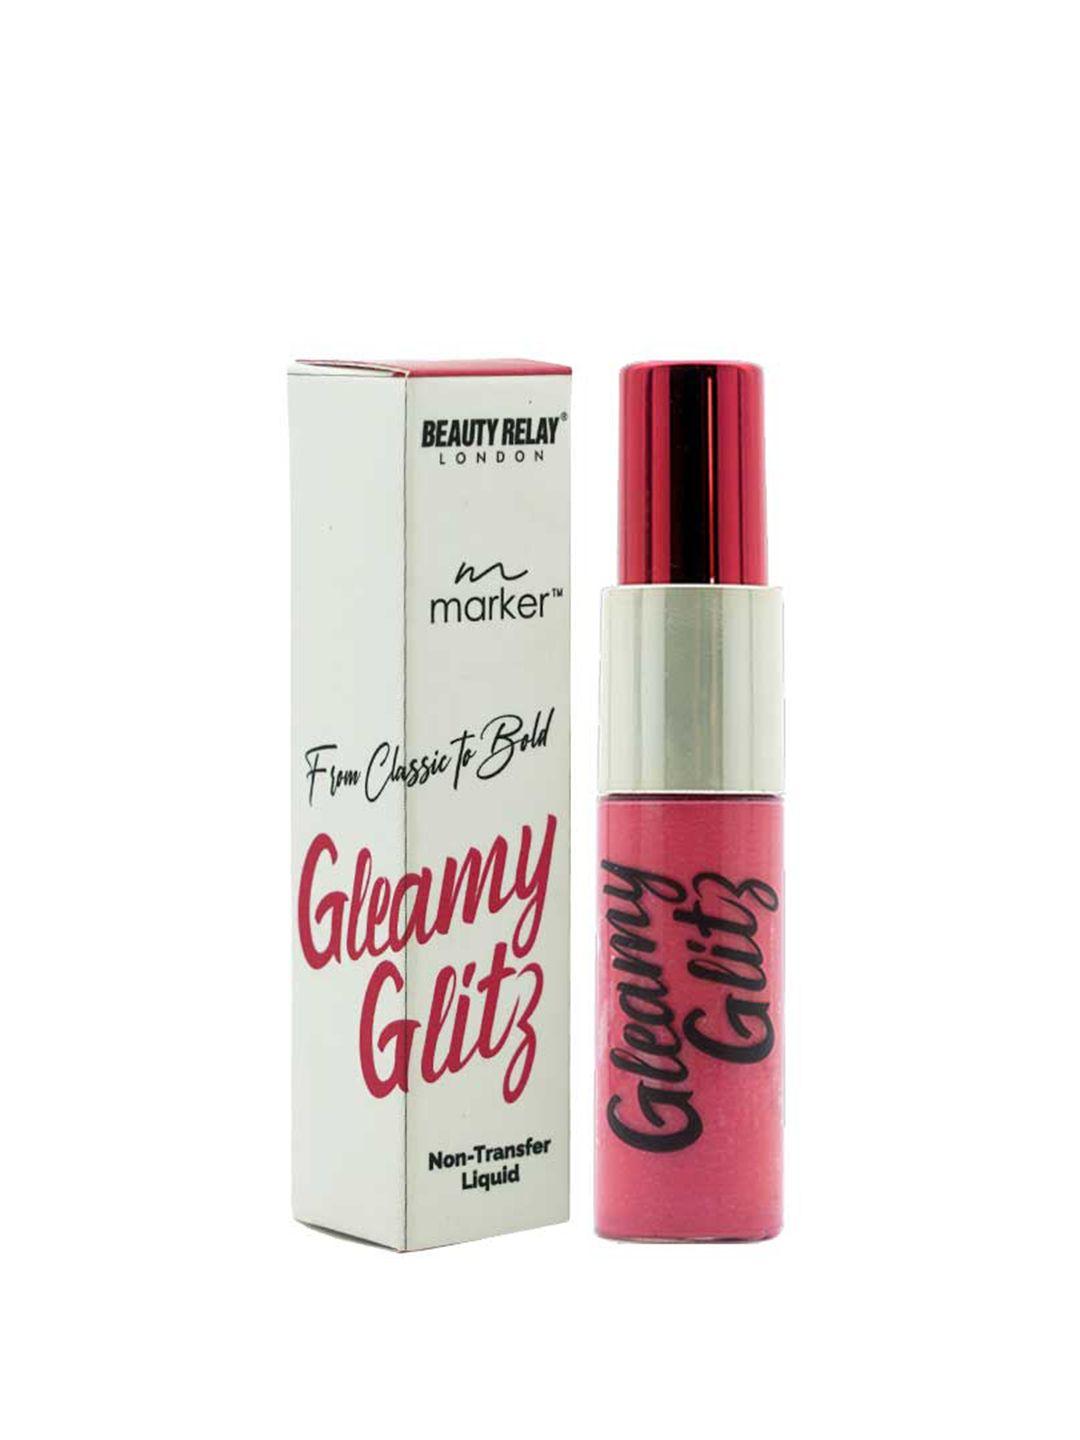 beautyrelay london marker gleamy glitz non-transfer liquid lipstick 10g - true magenta 07